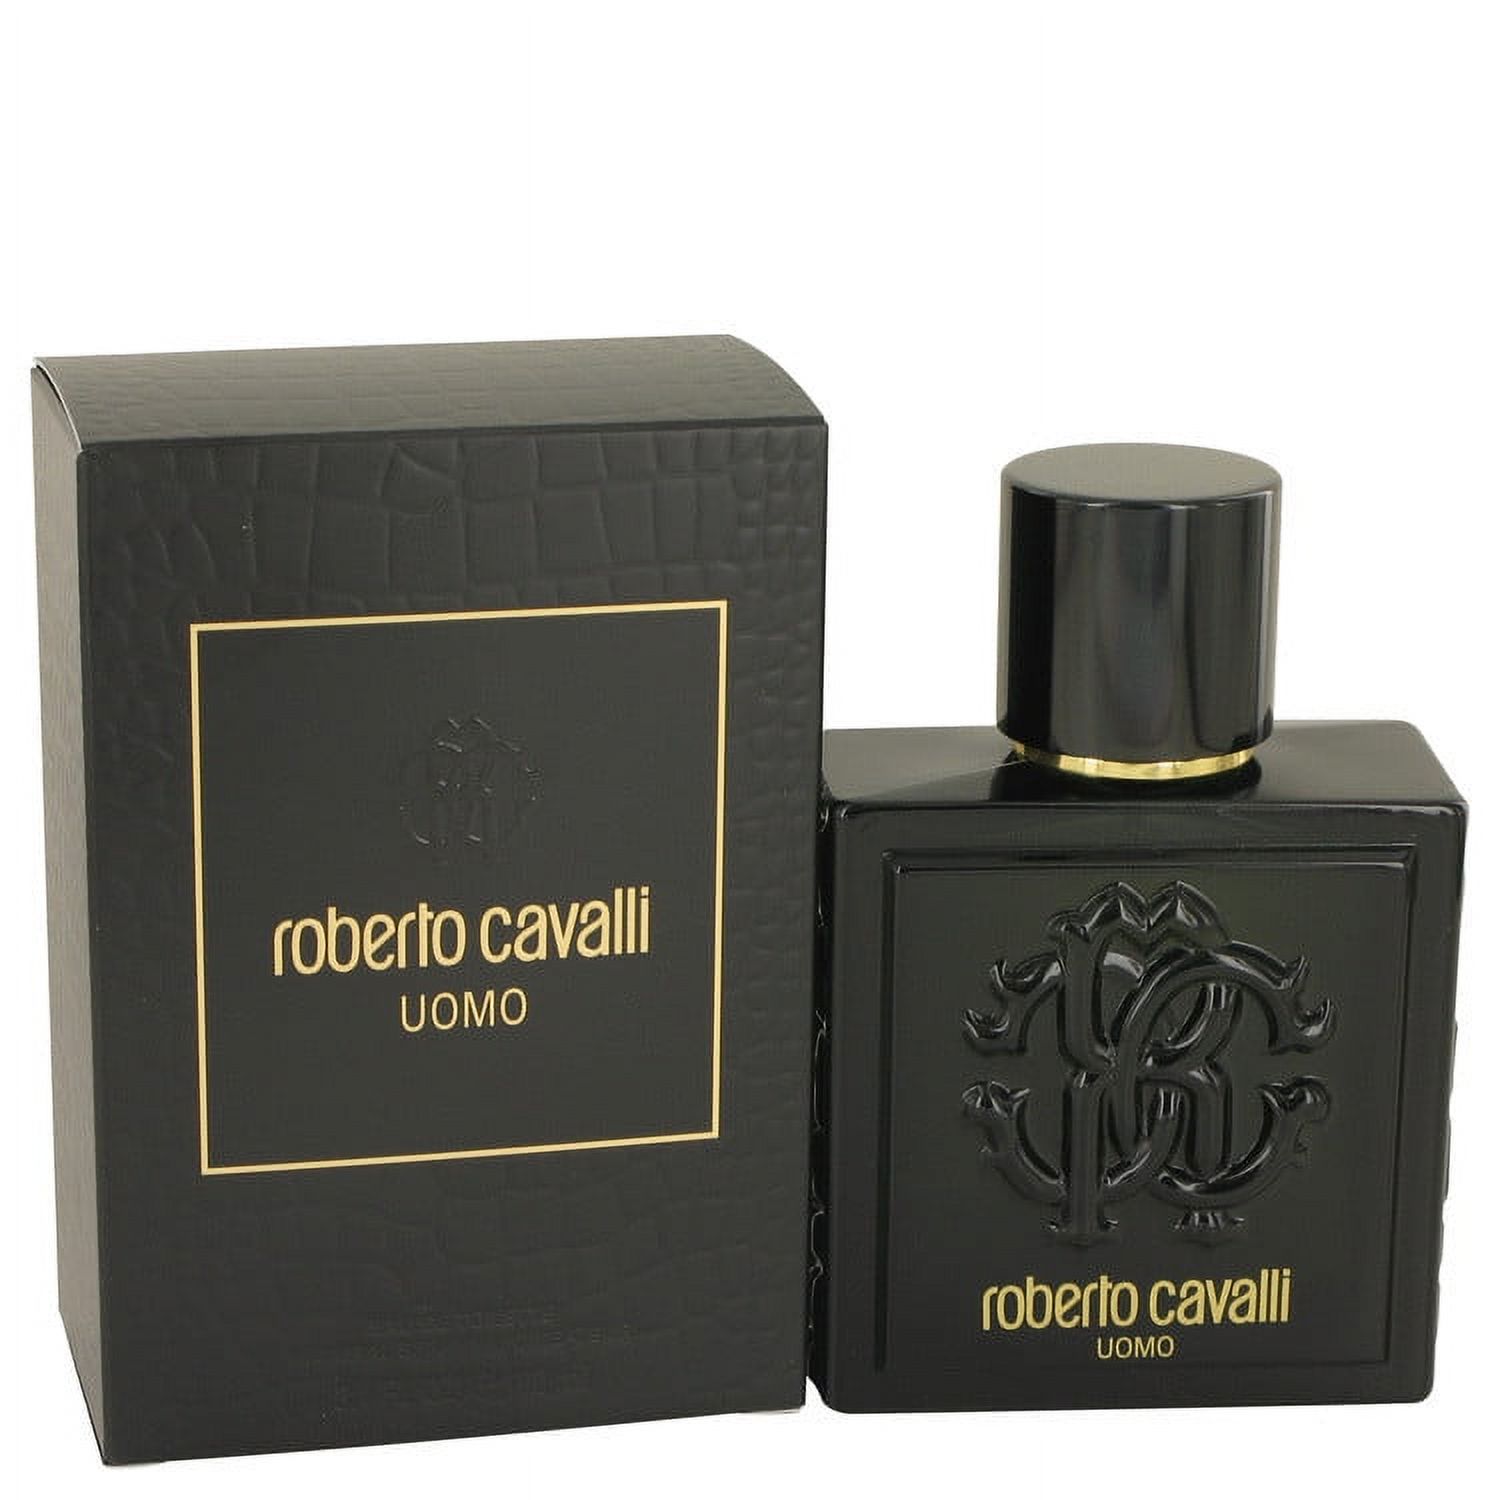 Roberto Cavalli Uomo by Roberto Cavalli Eau De Toilette Spray 3.4 oz for Men - image 2 of 2